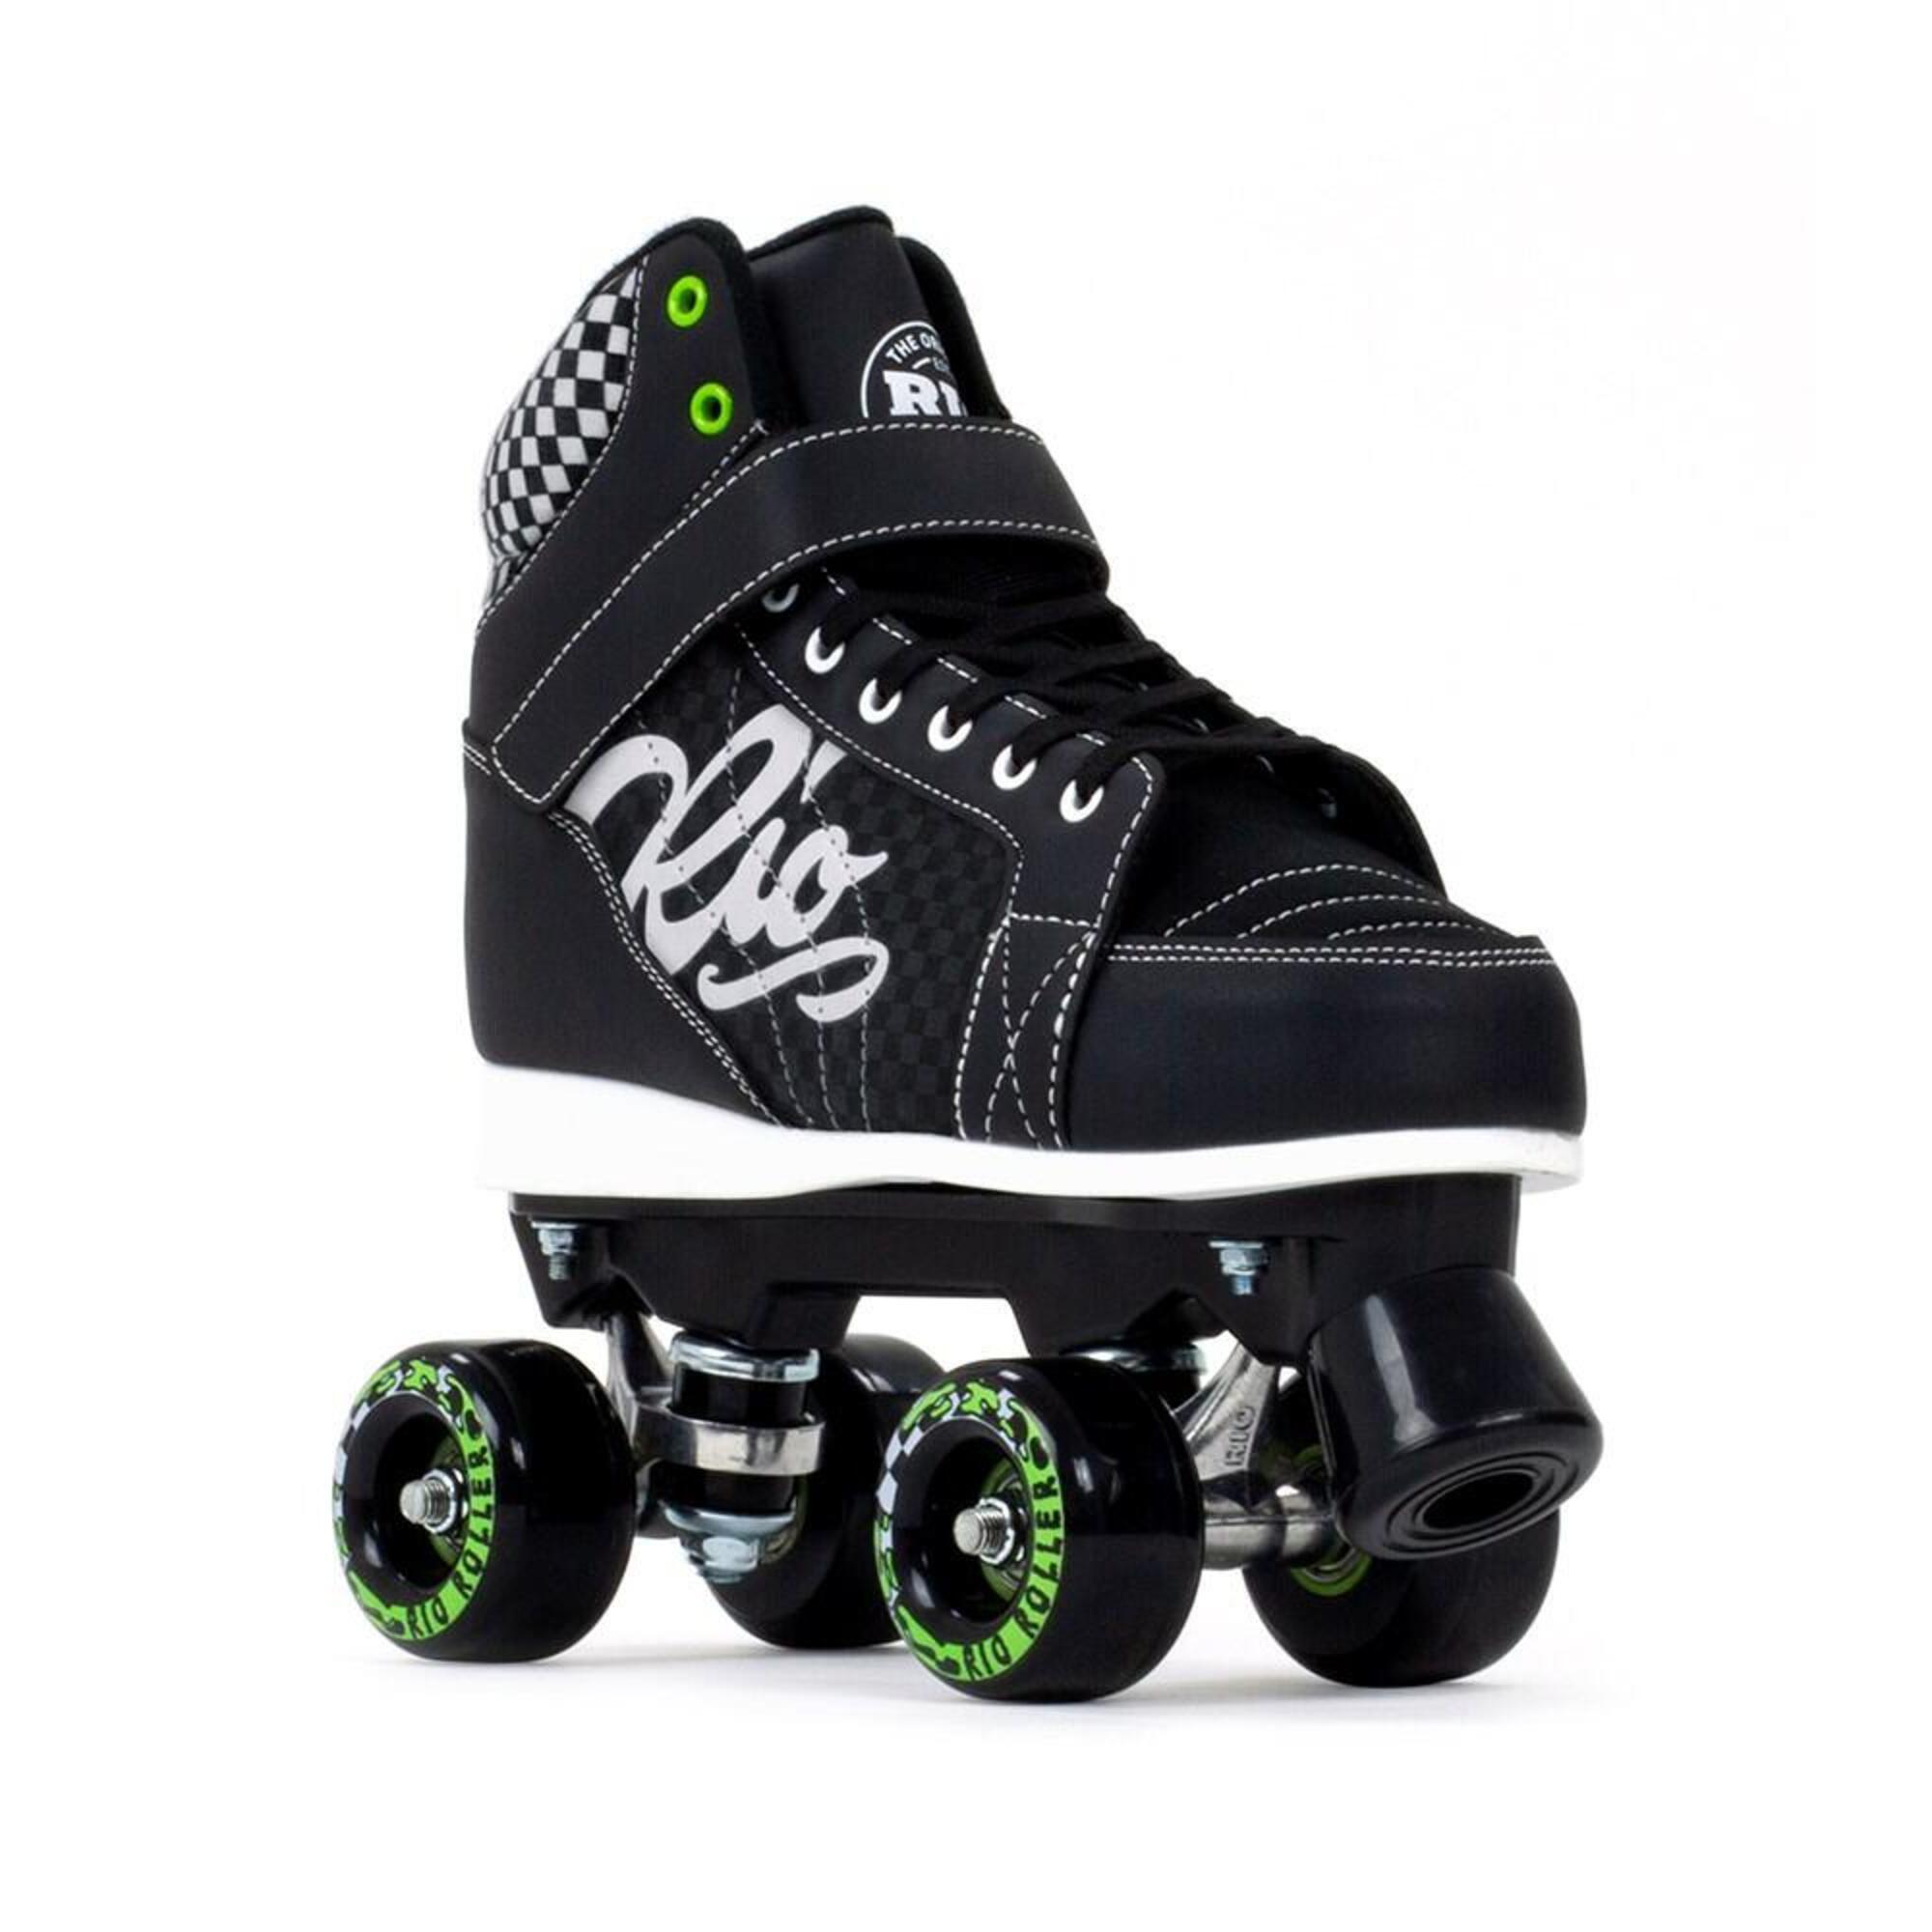 Mayhem II Black Quad Roller Skates 1/4